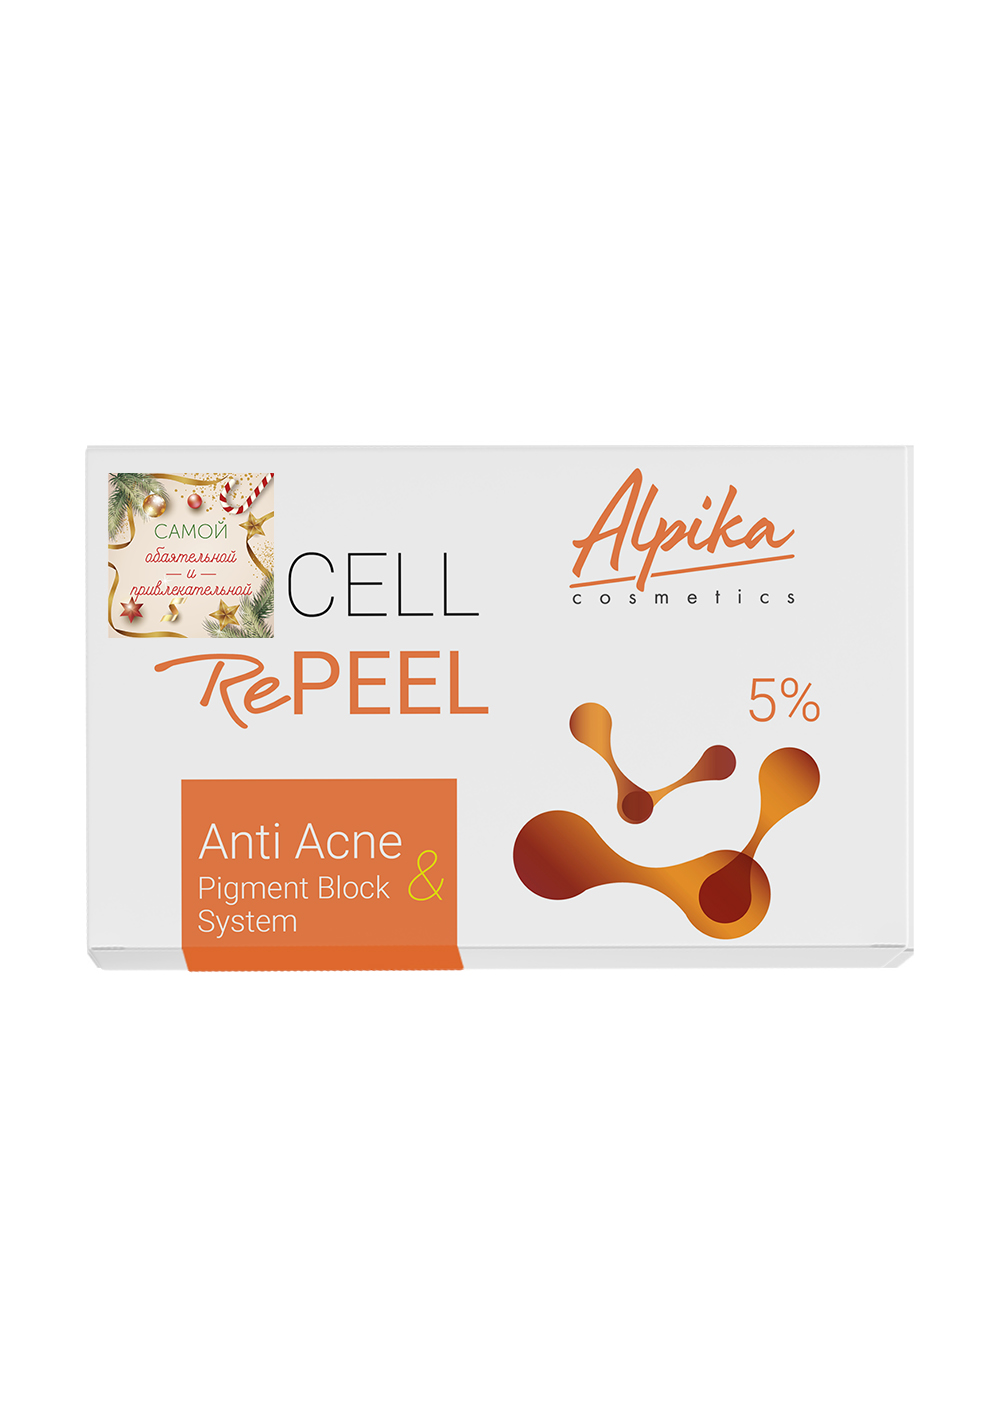 Набор СELL RePEEL 5% Anti Acne & Pigment Block System